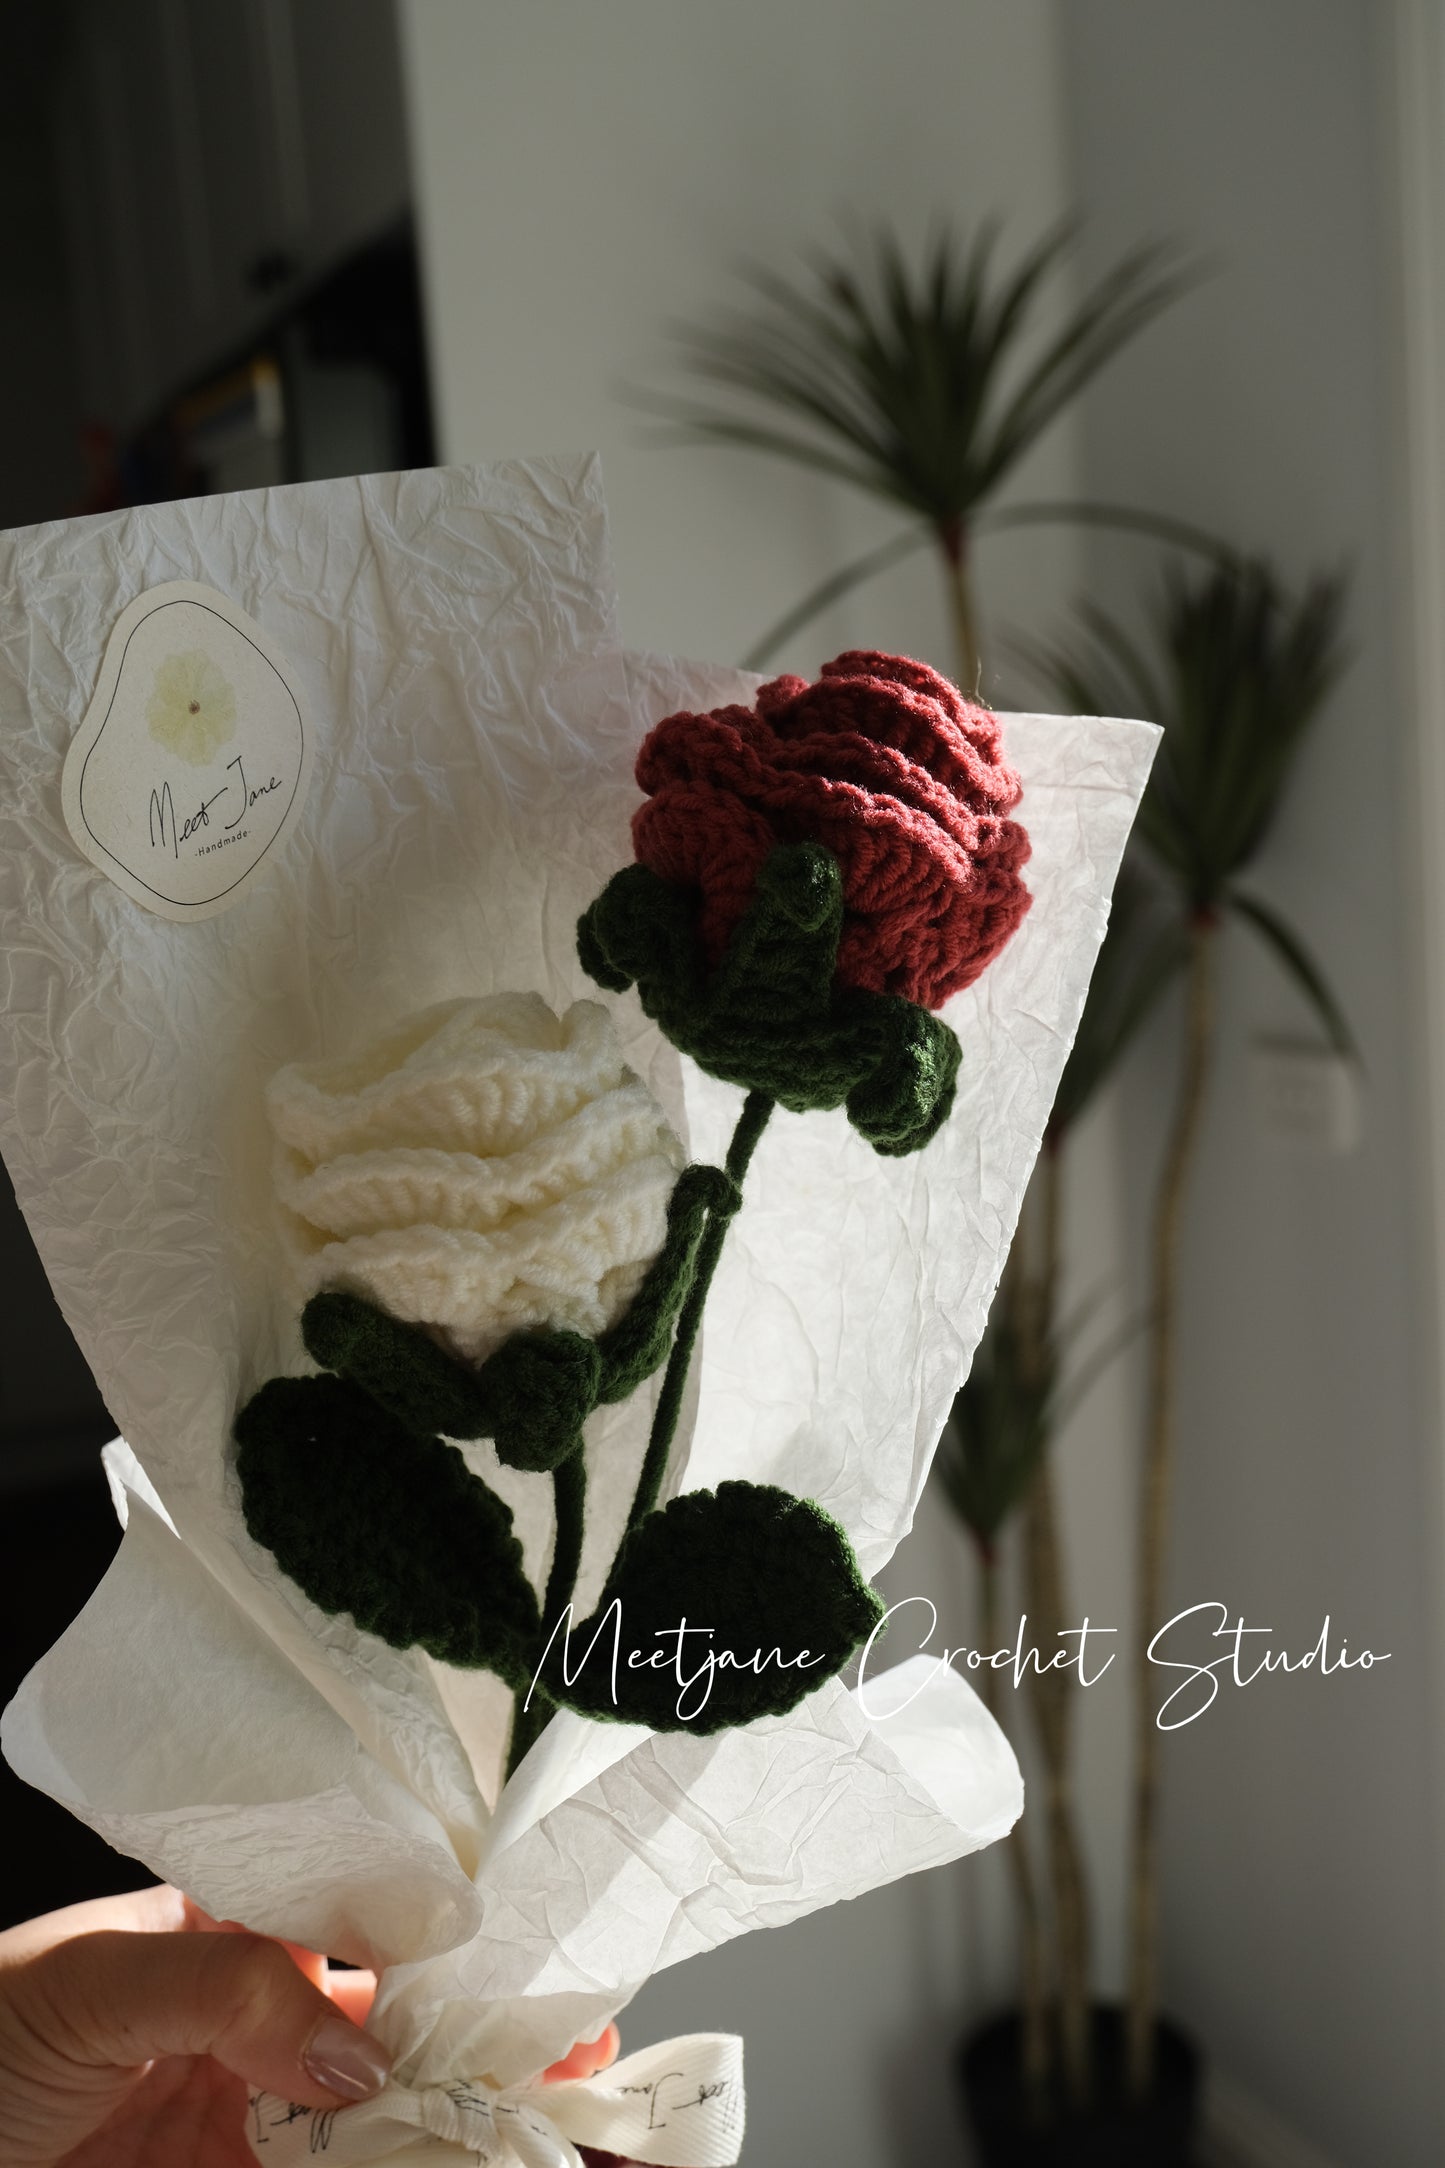 Meetjane bouquet|Melbourne handmade |ROSE